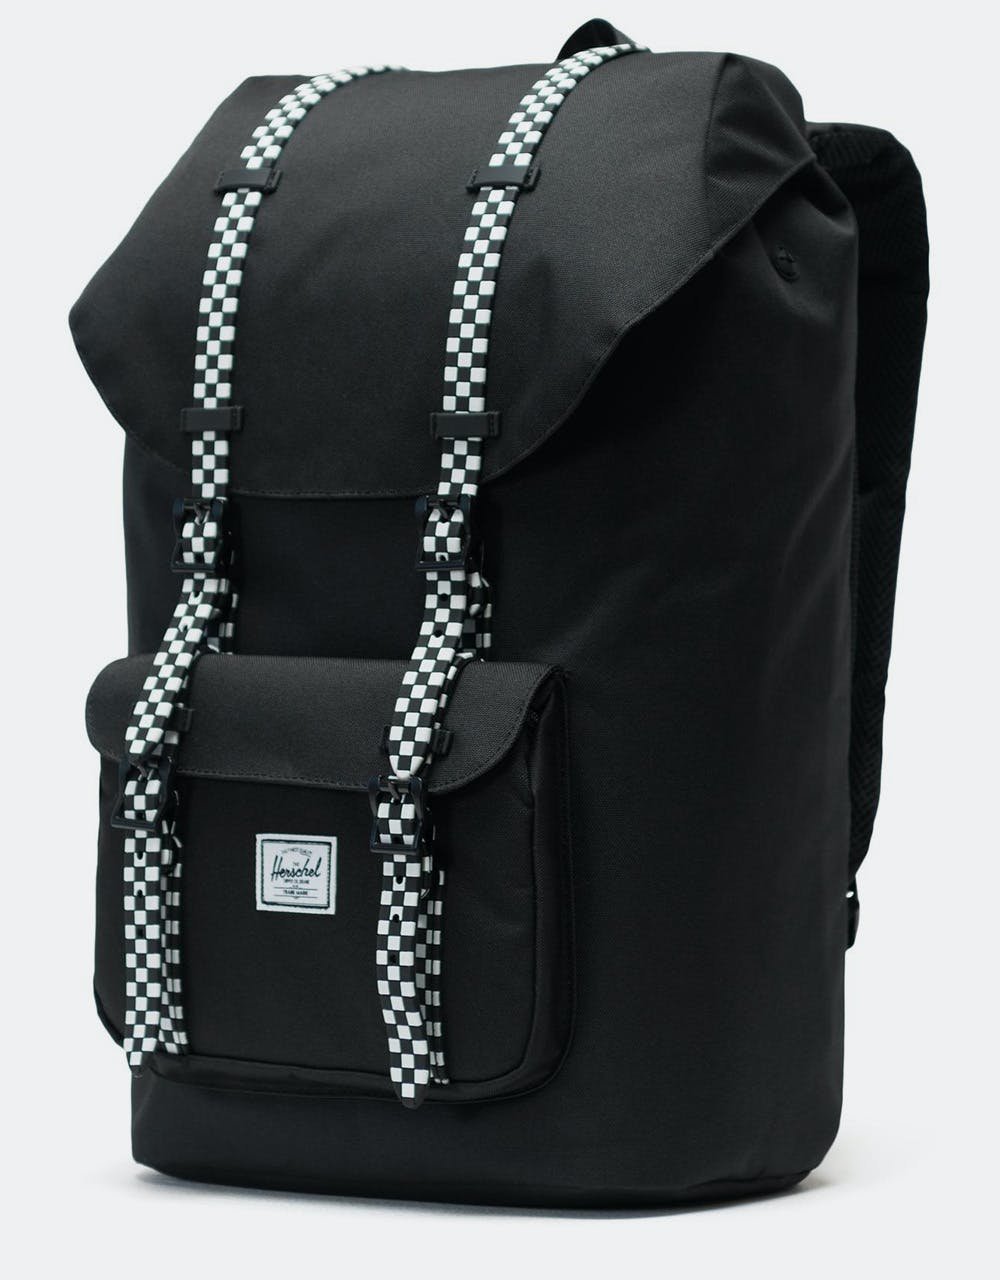 Herschel Supply Co. Little America Backpack - Black/Checkerboard